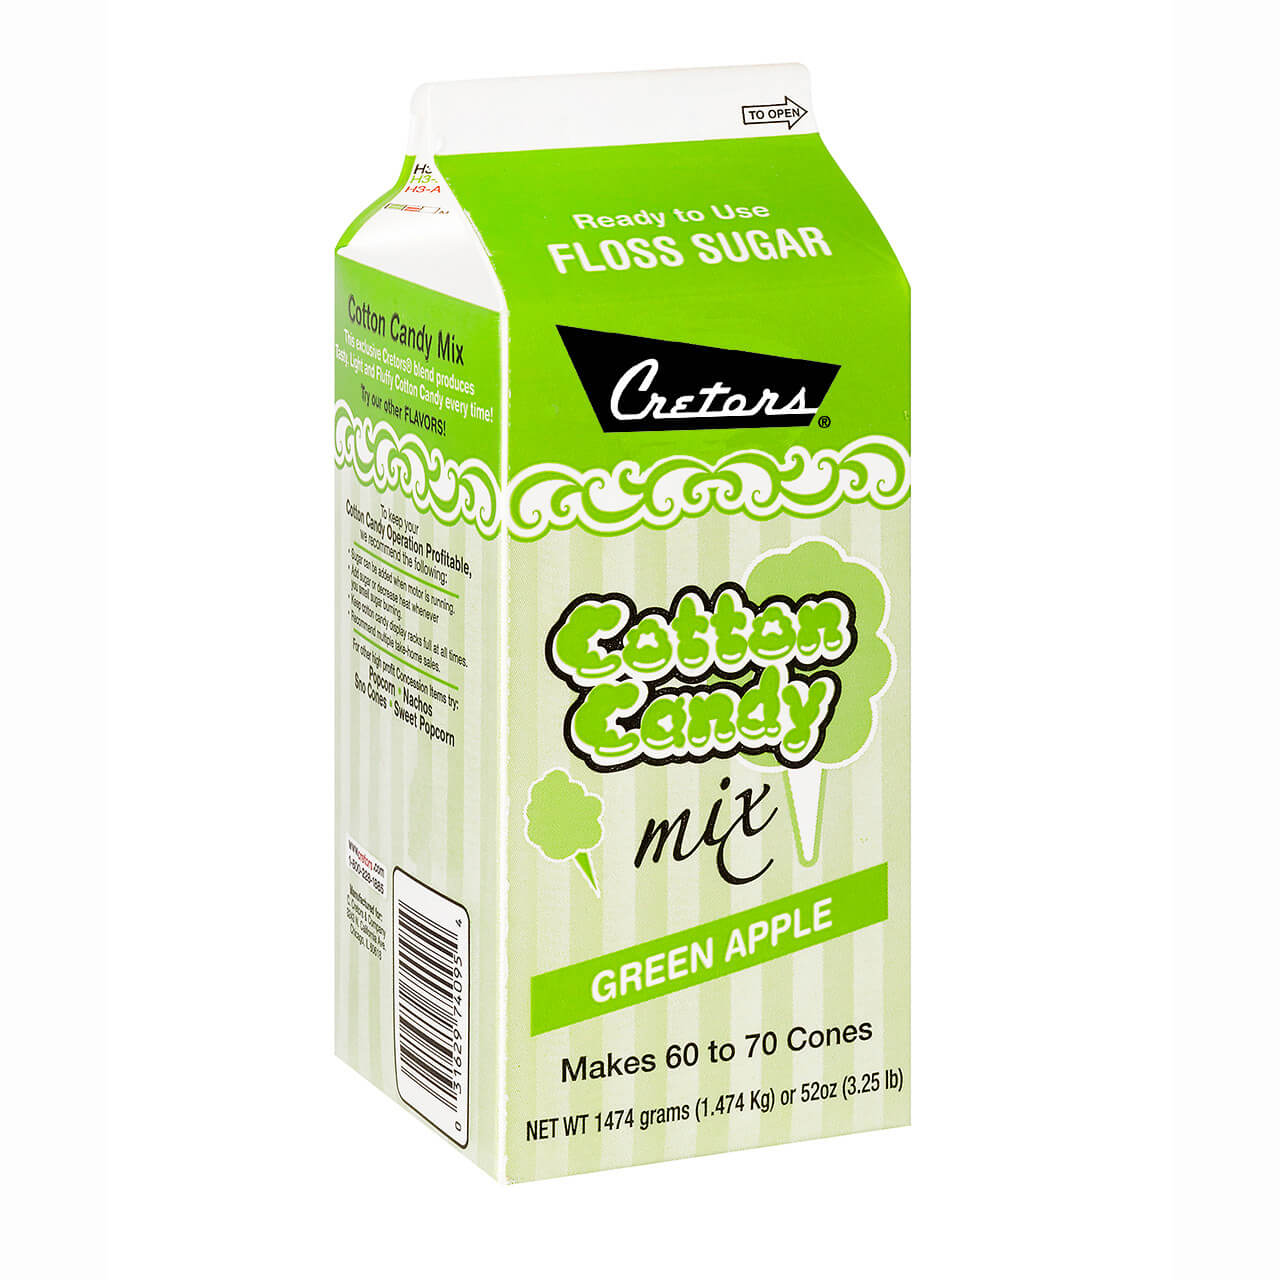 Cotton Candy Floss - Green Apple 6 units 3.25 lb each/case